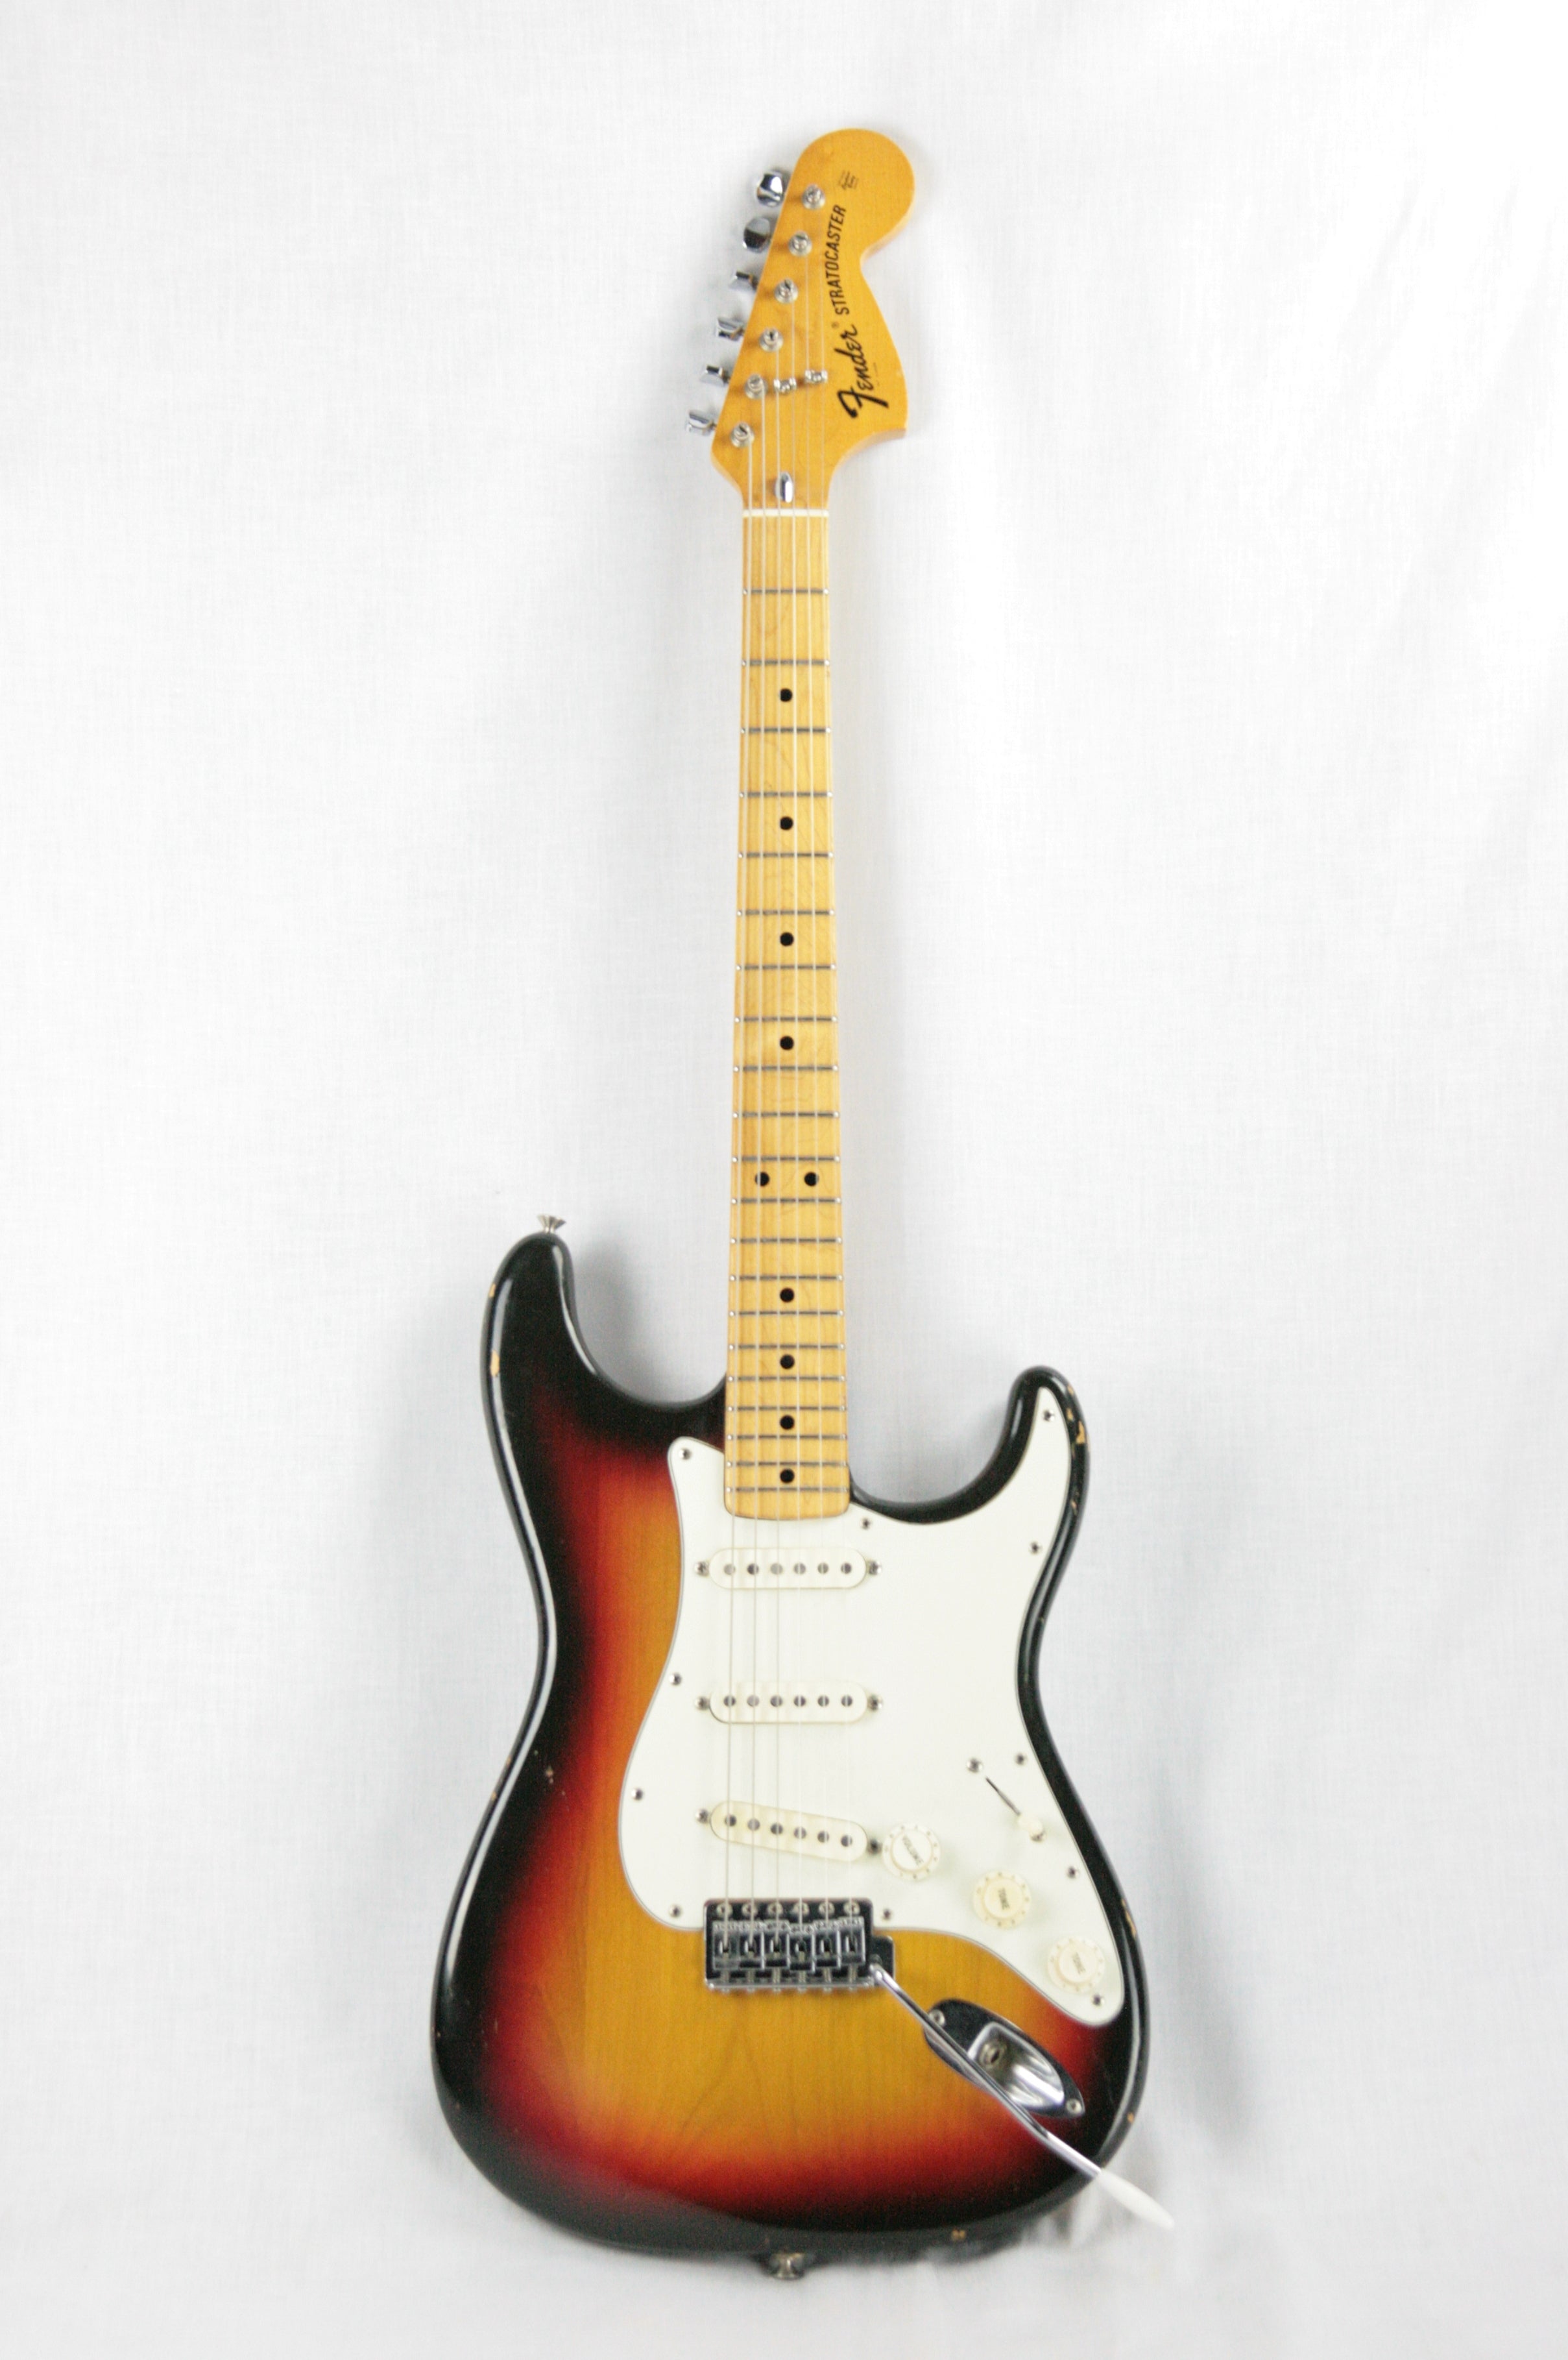 *SOLD*  1973 Fender Stratocaster SUNBURST w/ Maple Neck Strat! Staggered Pole Pups 1970's